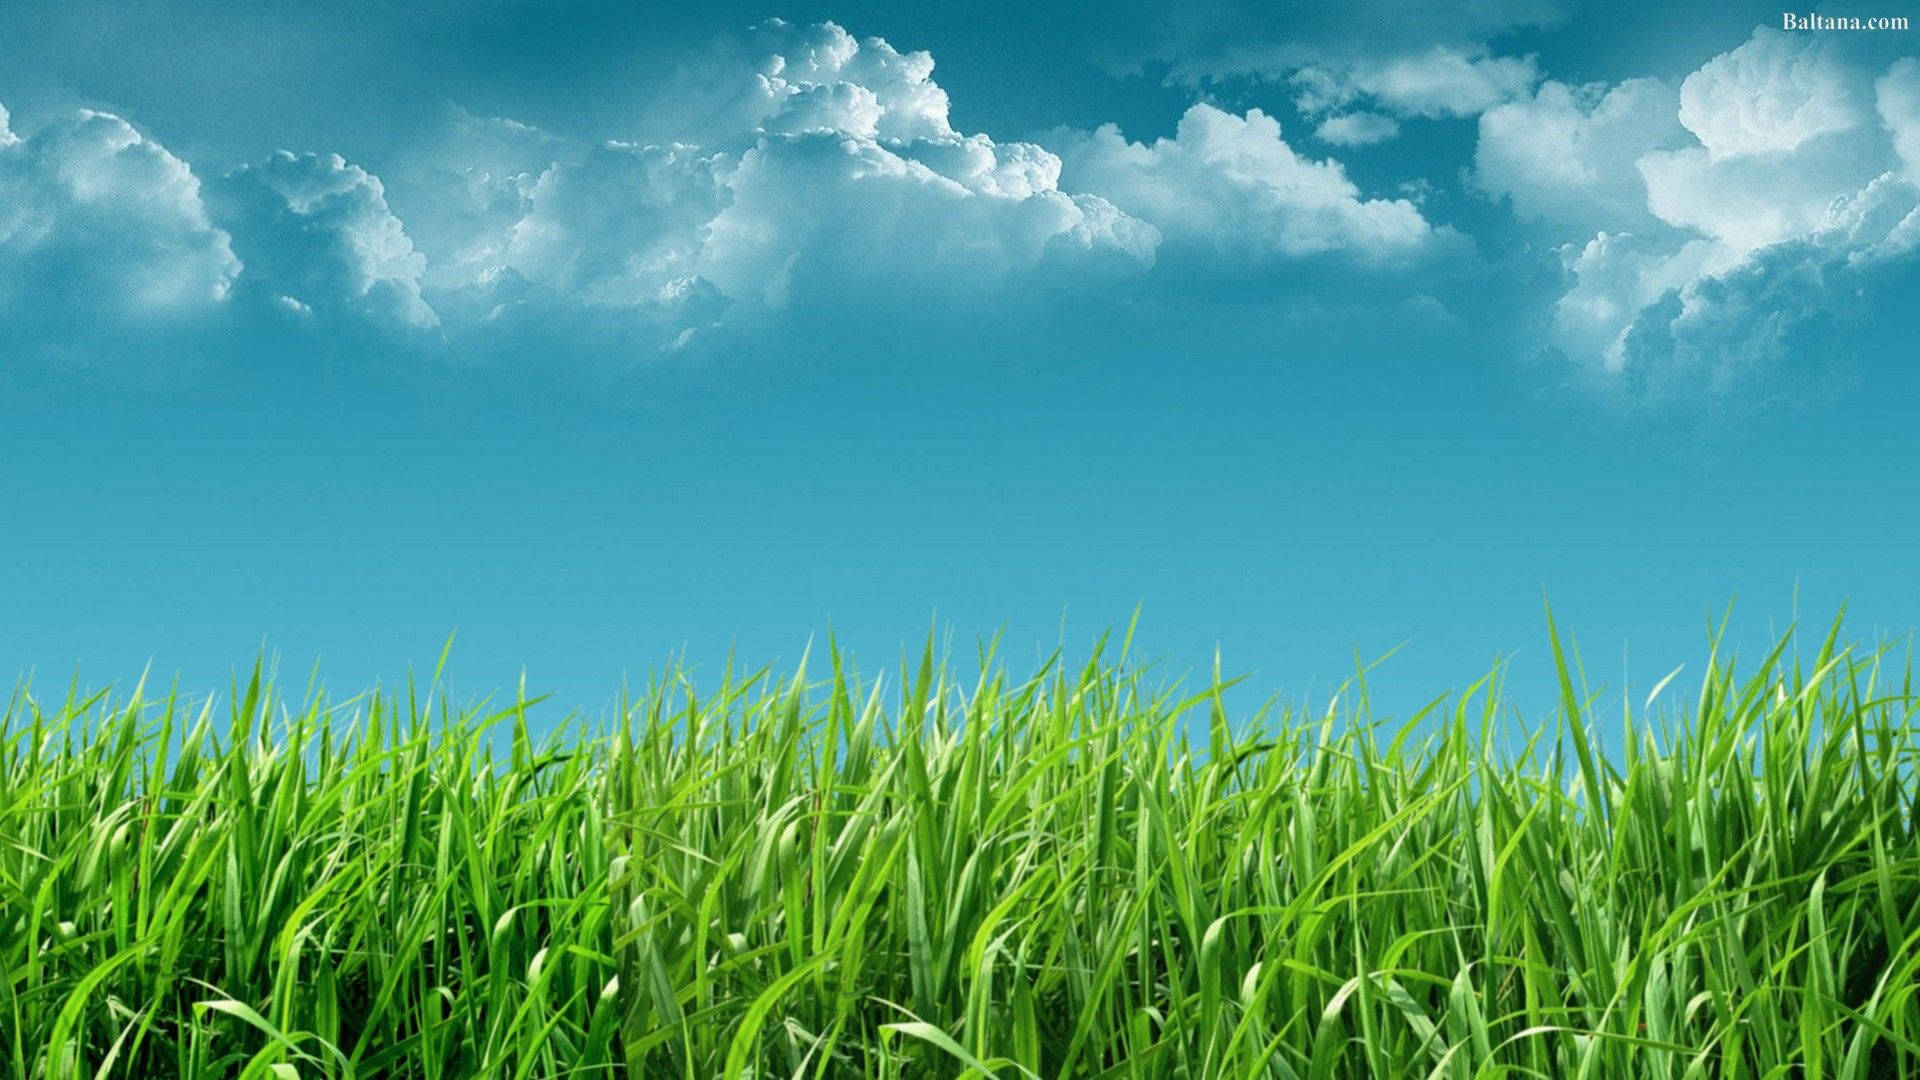 Tall Grass Under Sky Background